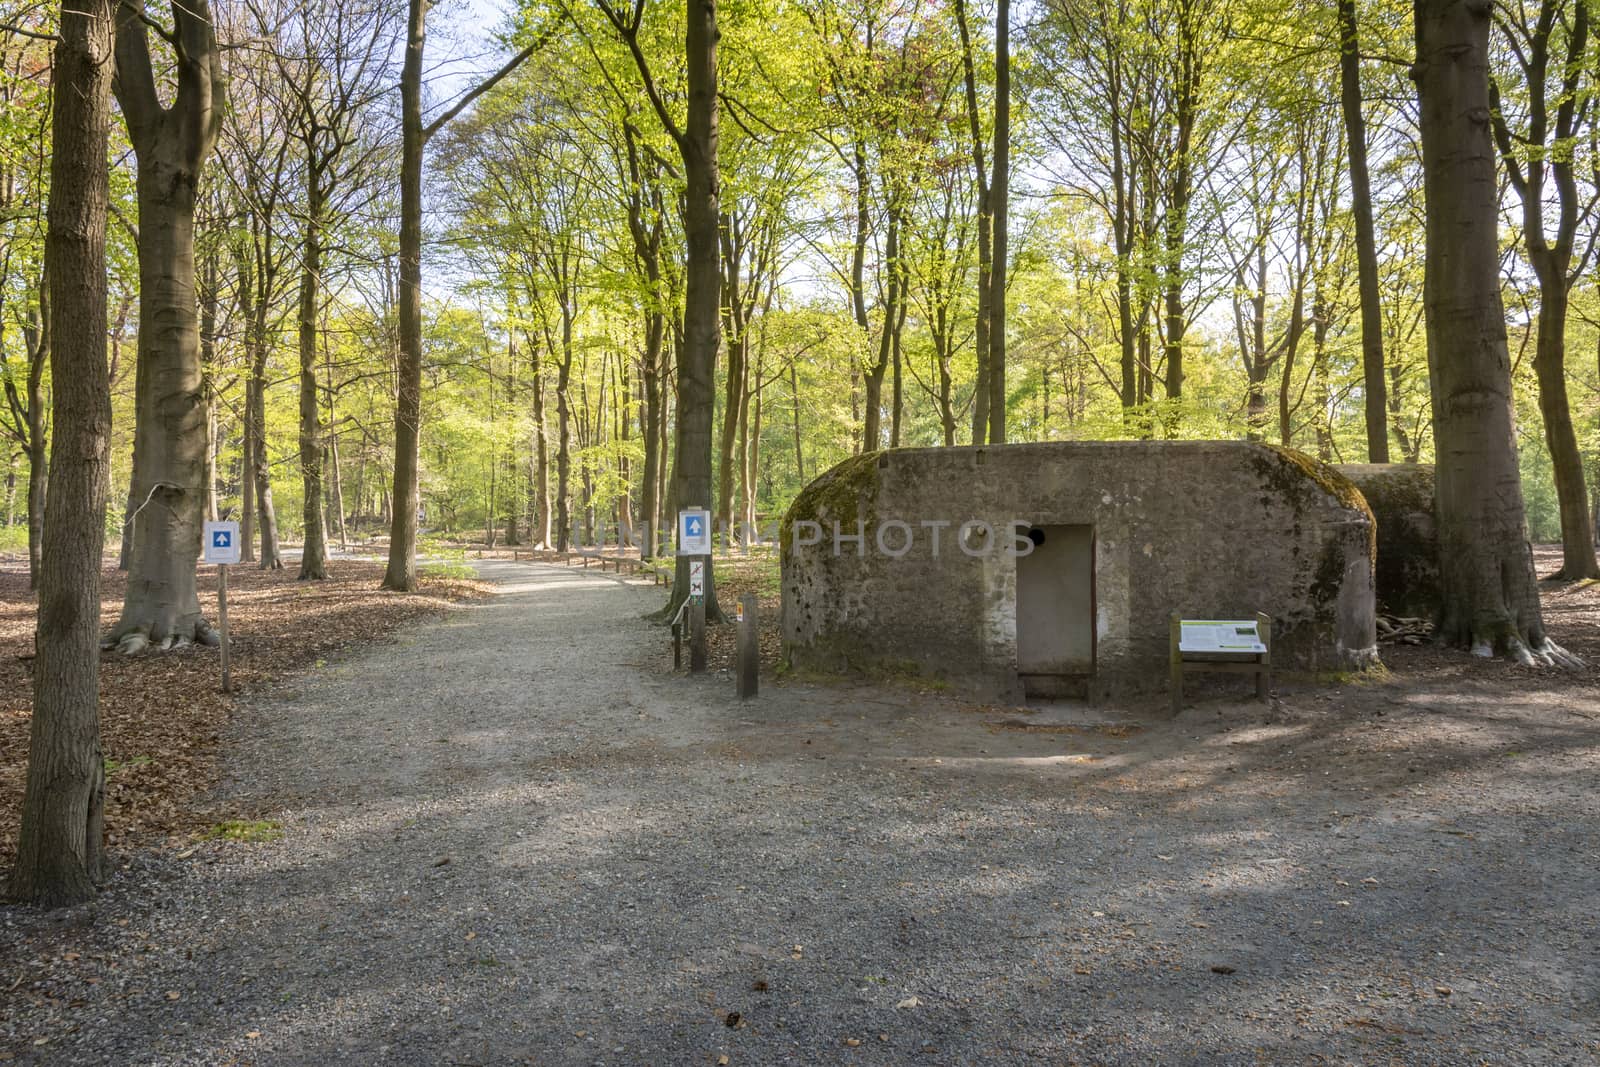 Kapellen, Belgium, April 2020: Start of the Loopgravenpad, walkway through trenches, on the historical Flanders Fields site in Mastenbos, Kapellen. German bunker in background.